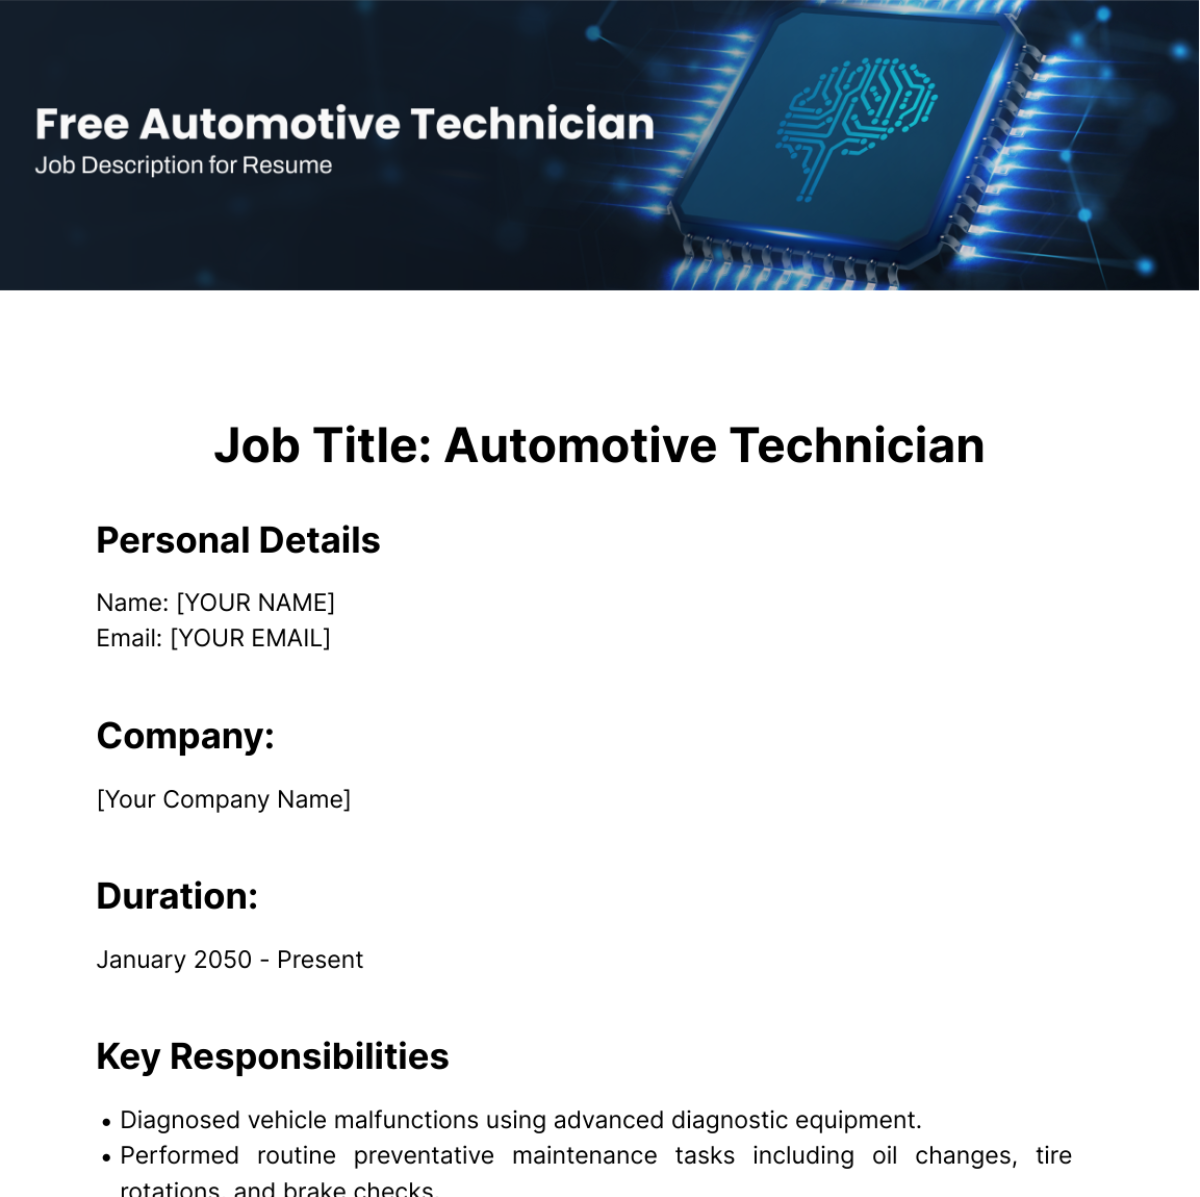 Automotive Technician Job Description for Resume Template